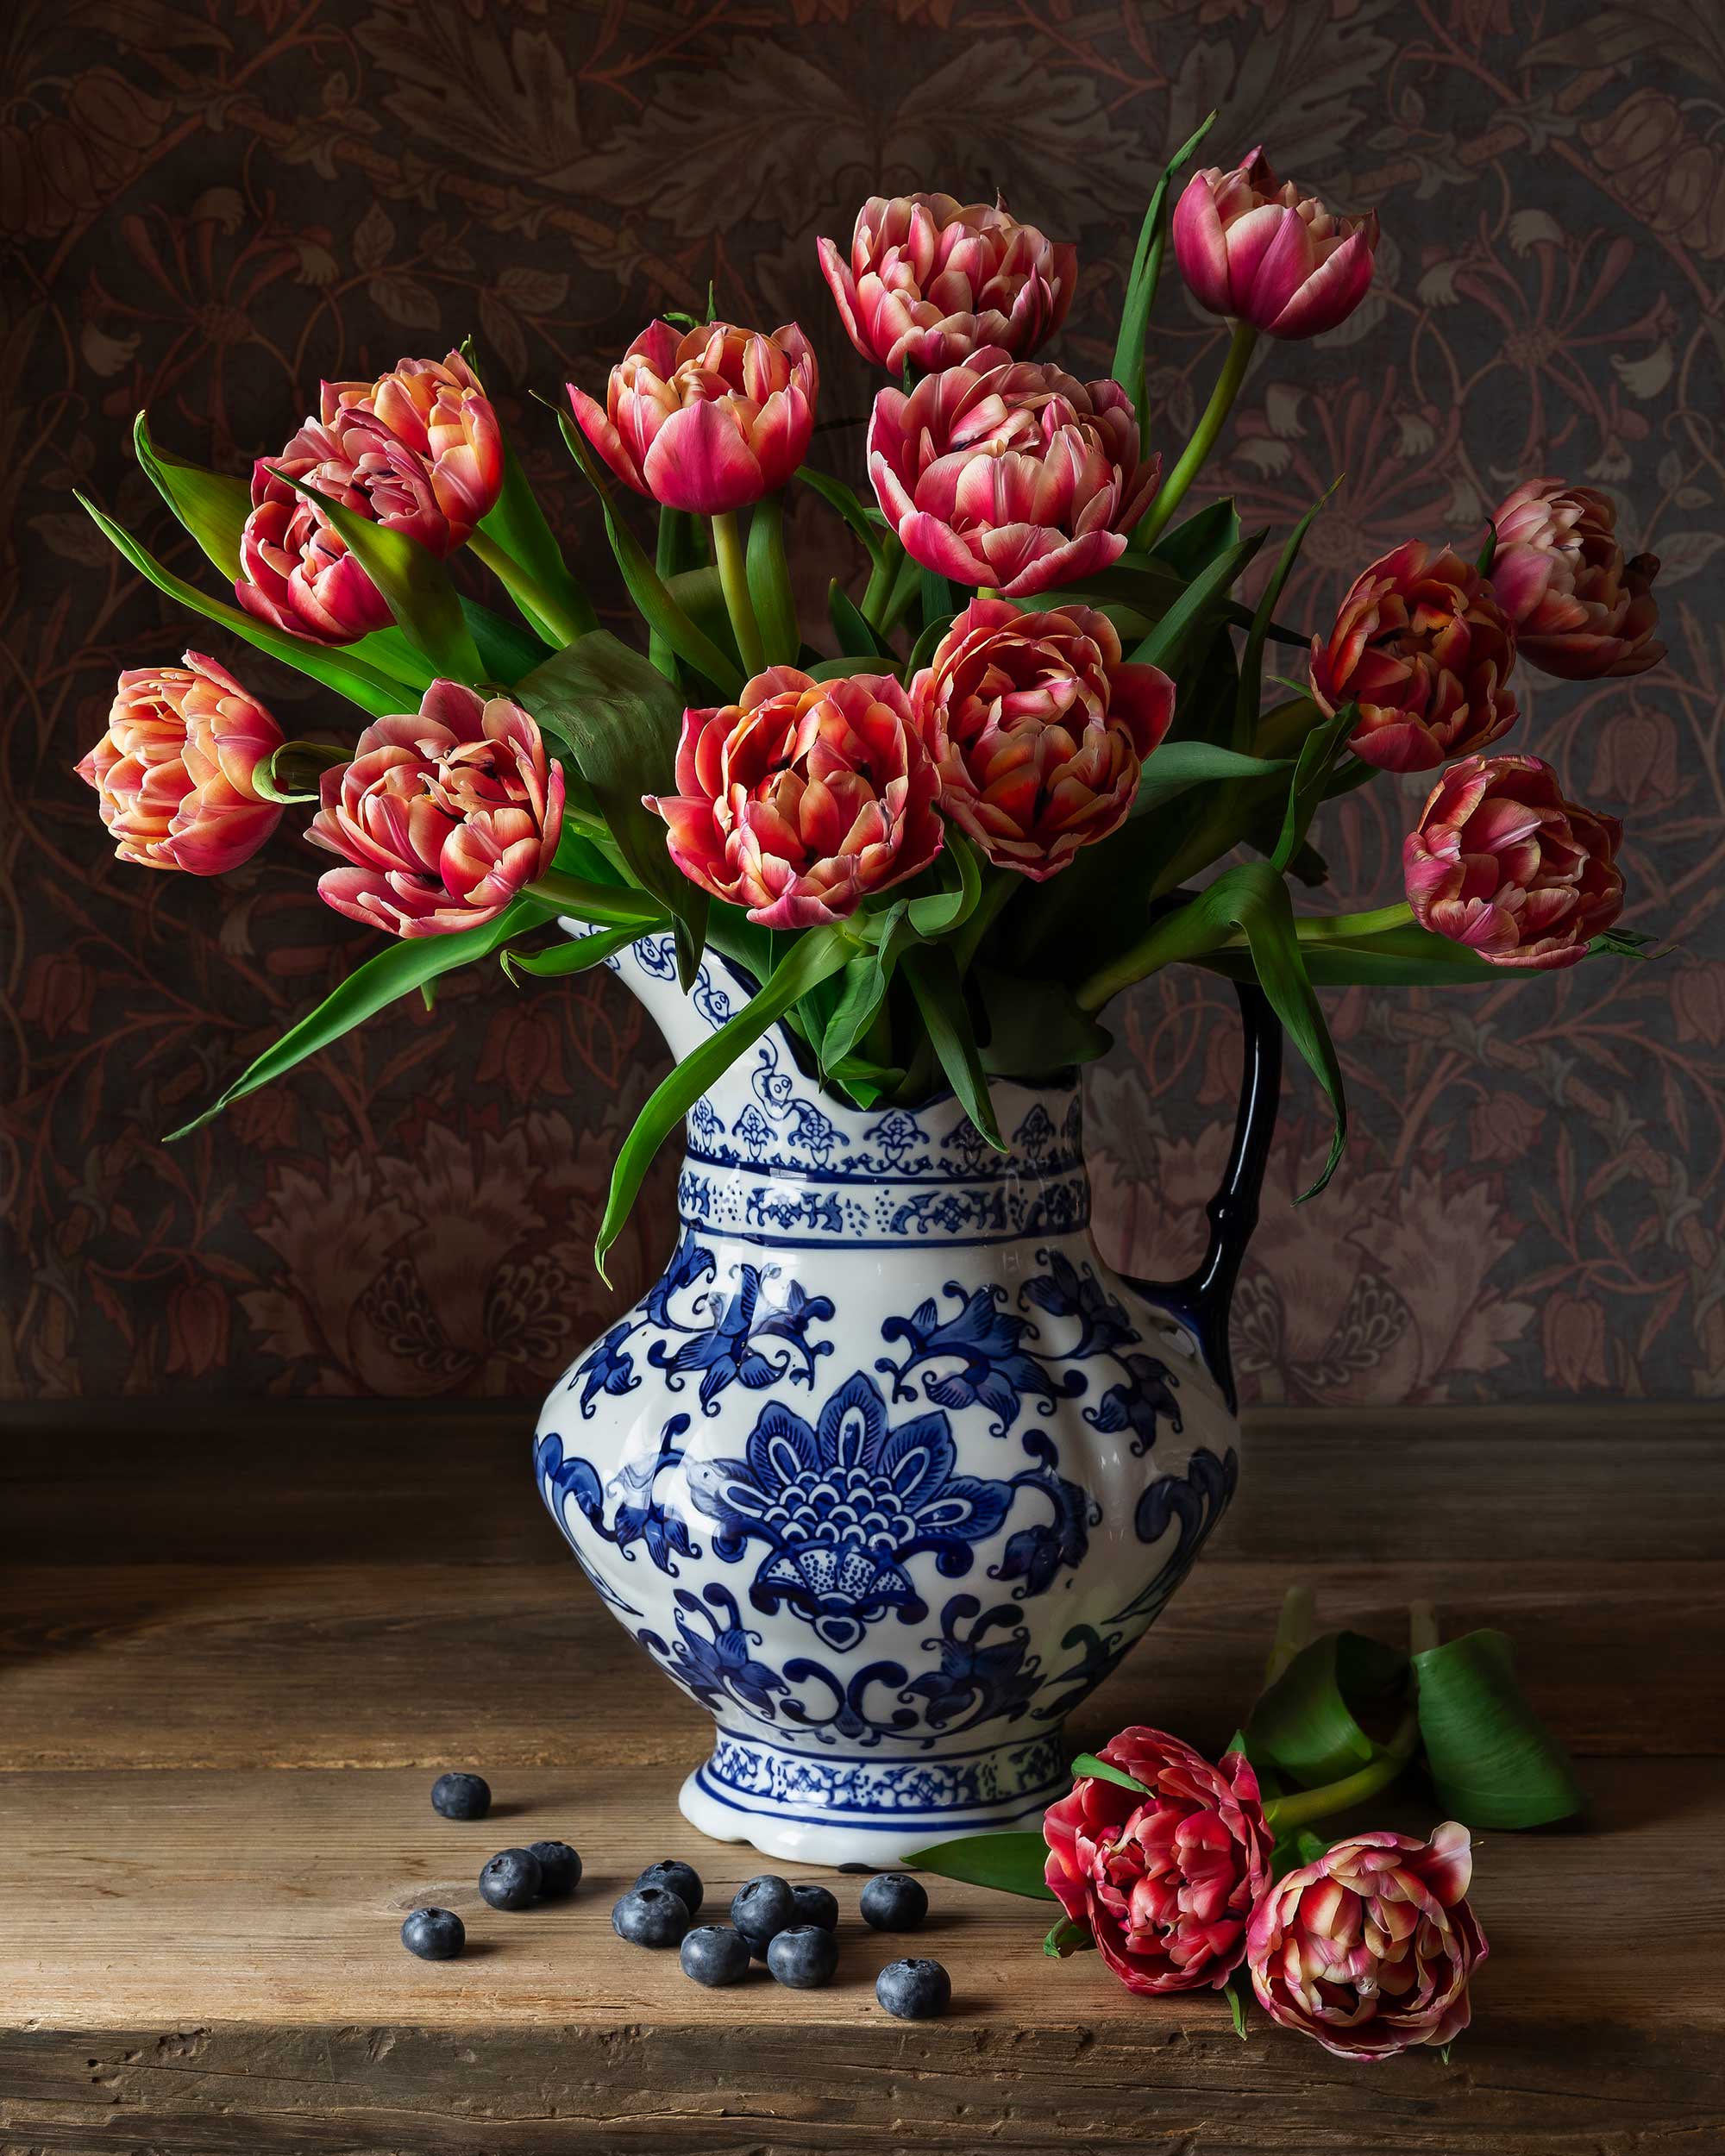 tulips, dutch tulips, tulipmania, botanical art, still life photography, flower decor, Слуцкая Яна